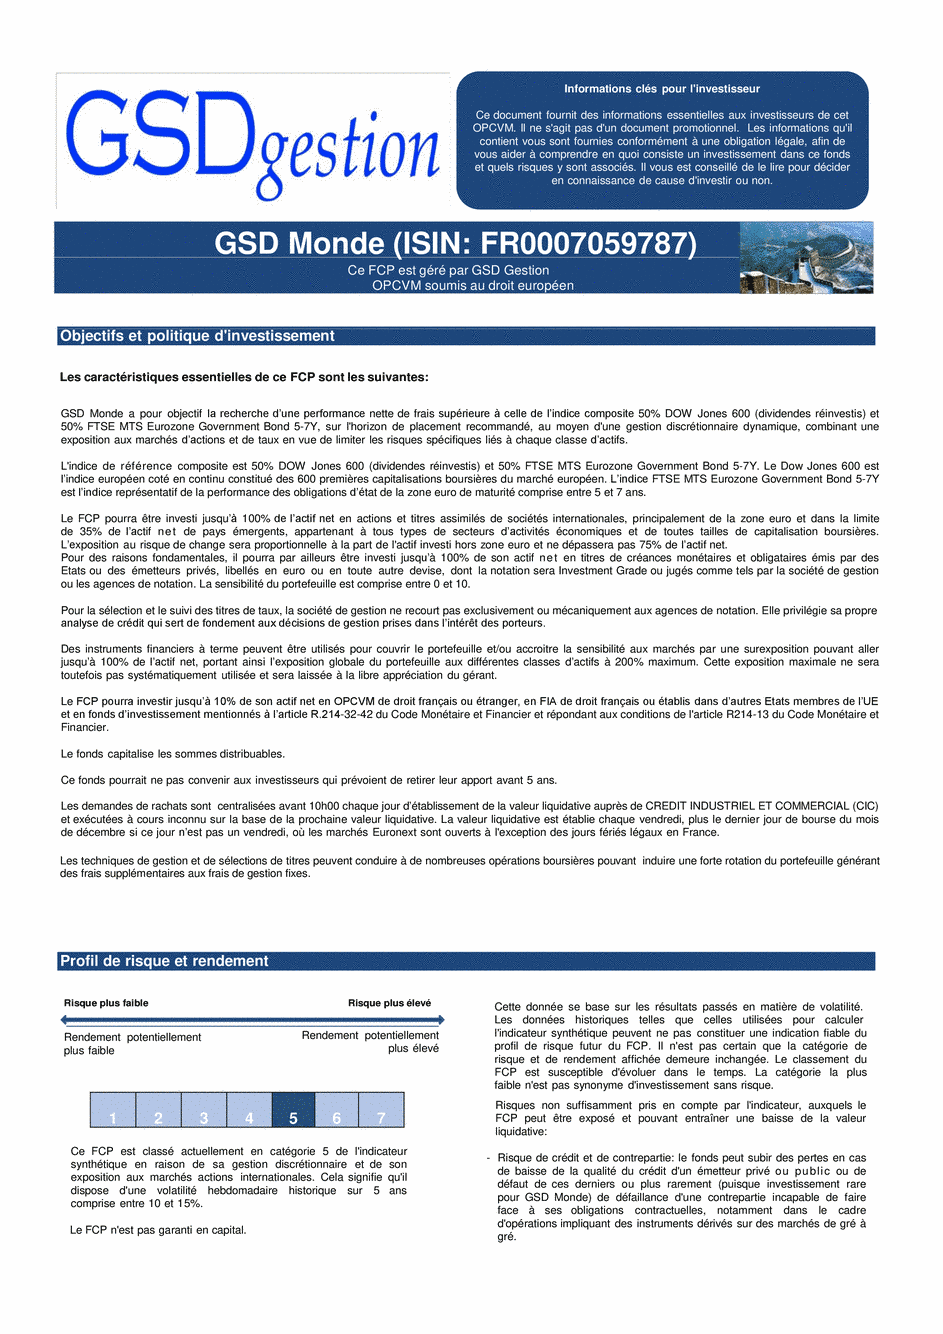 DICI-Prospectus GSD Monde - 20/02/2019 - Français